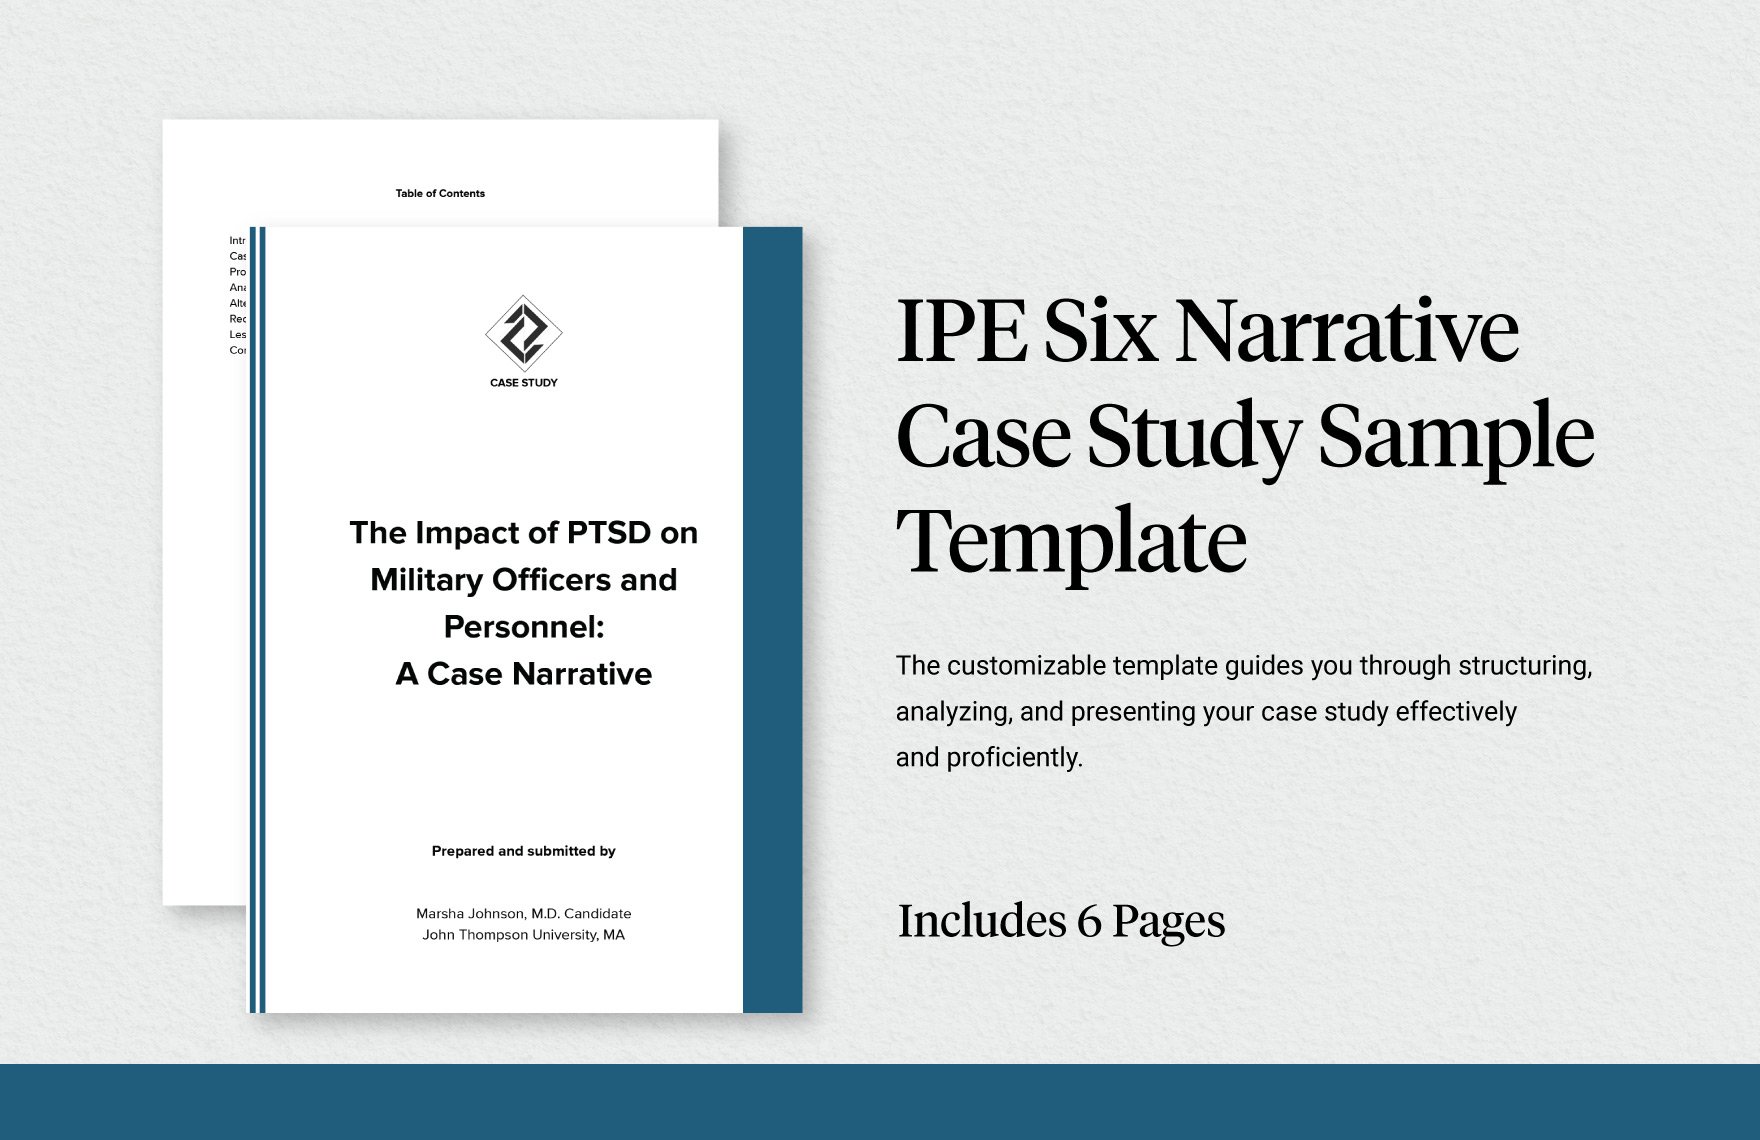 IPE Six Narrative Case Study Sample Template